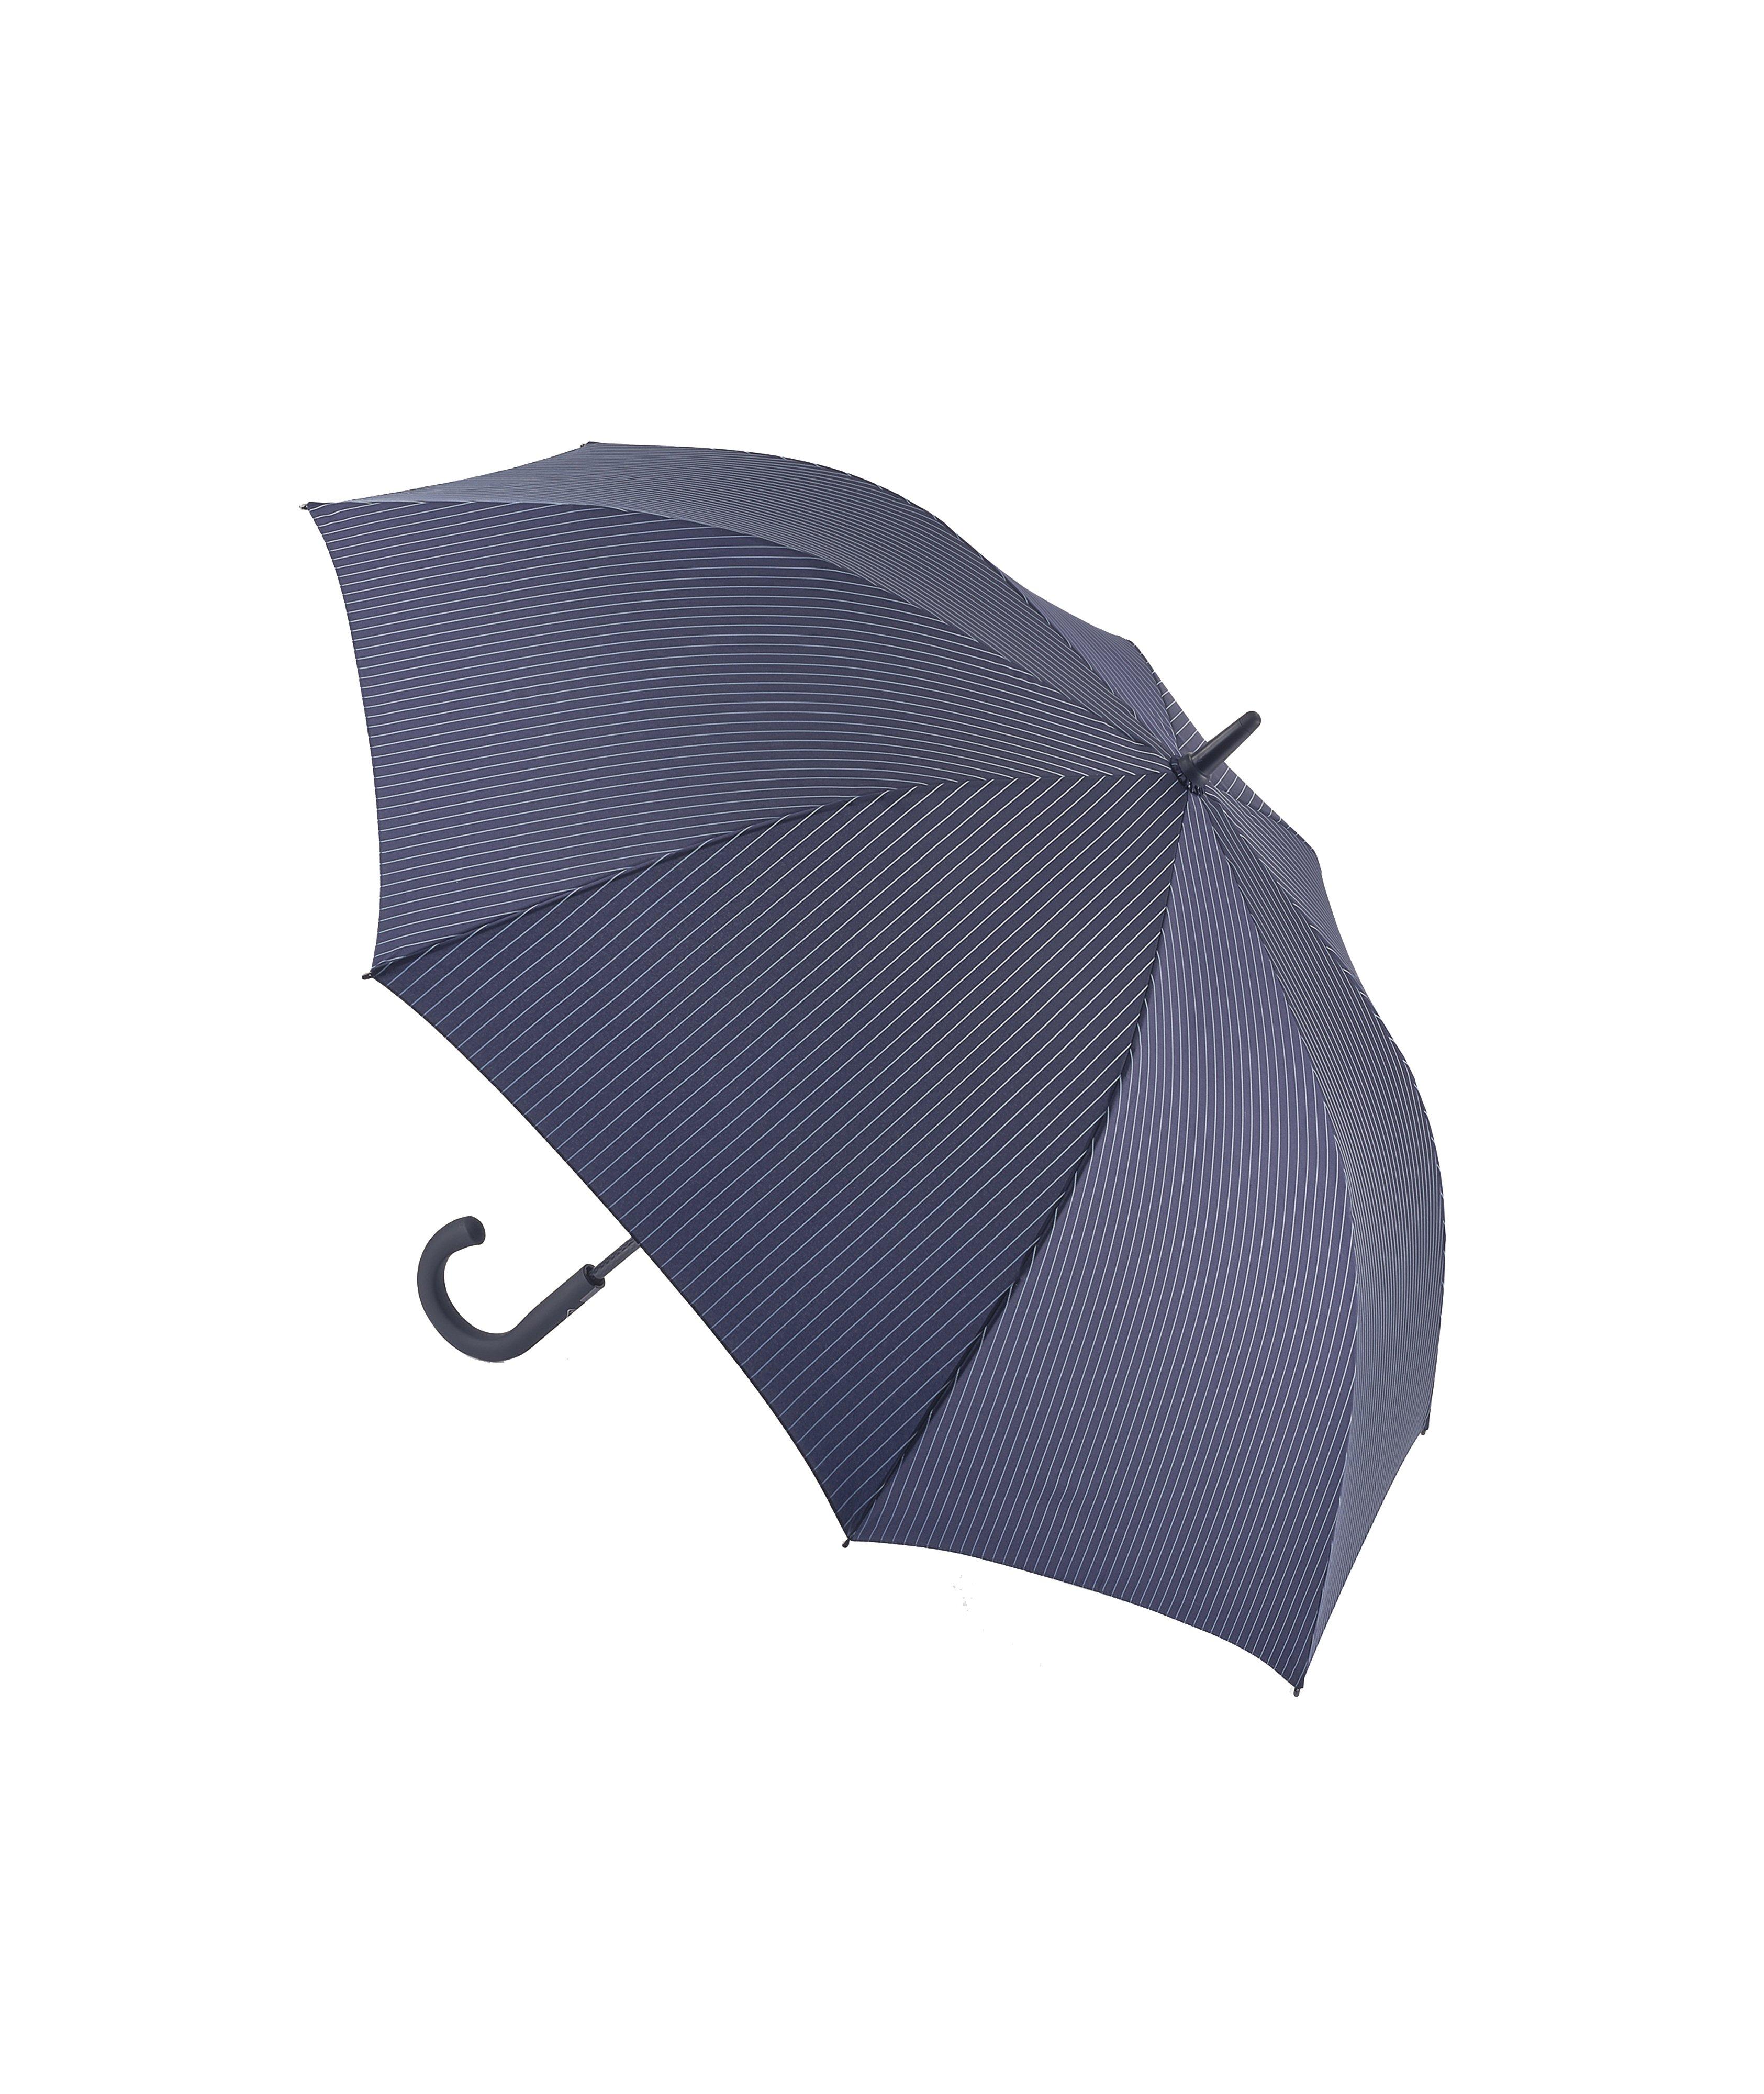 Parapluie Knightsbridge 2 image 0